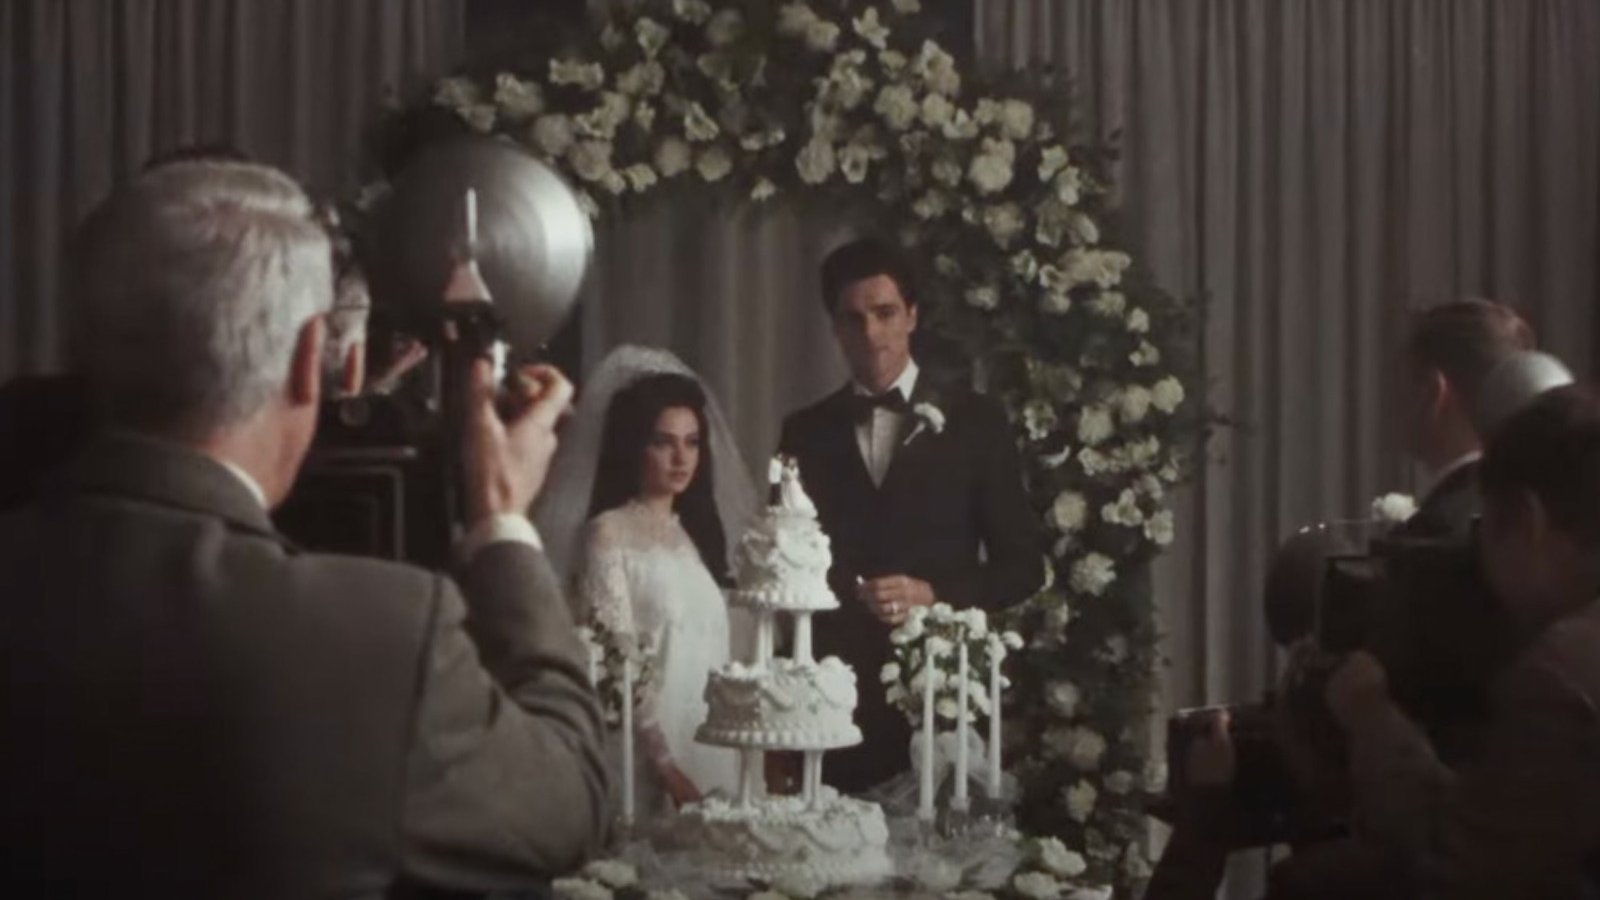 Priscilla: Kelly Spaney is Elvis' wife in the trailer for Sofia Coppola's biopic